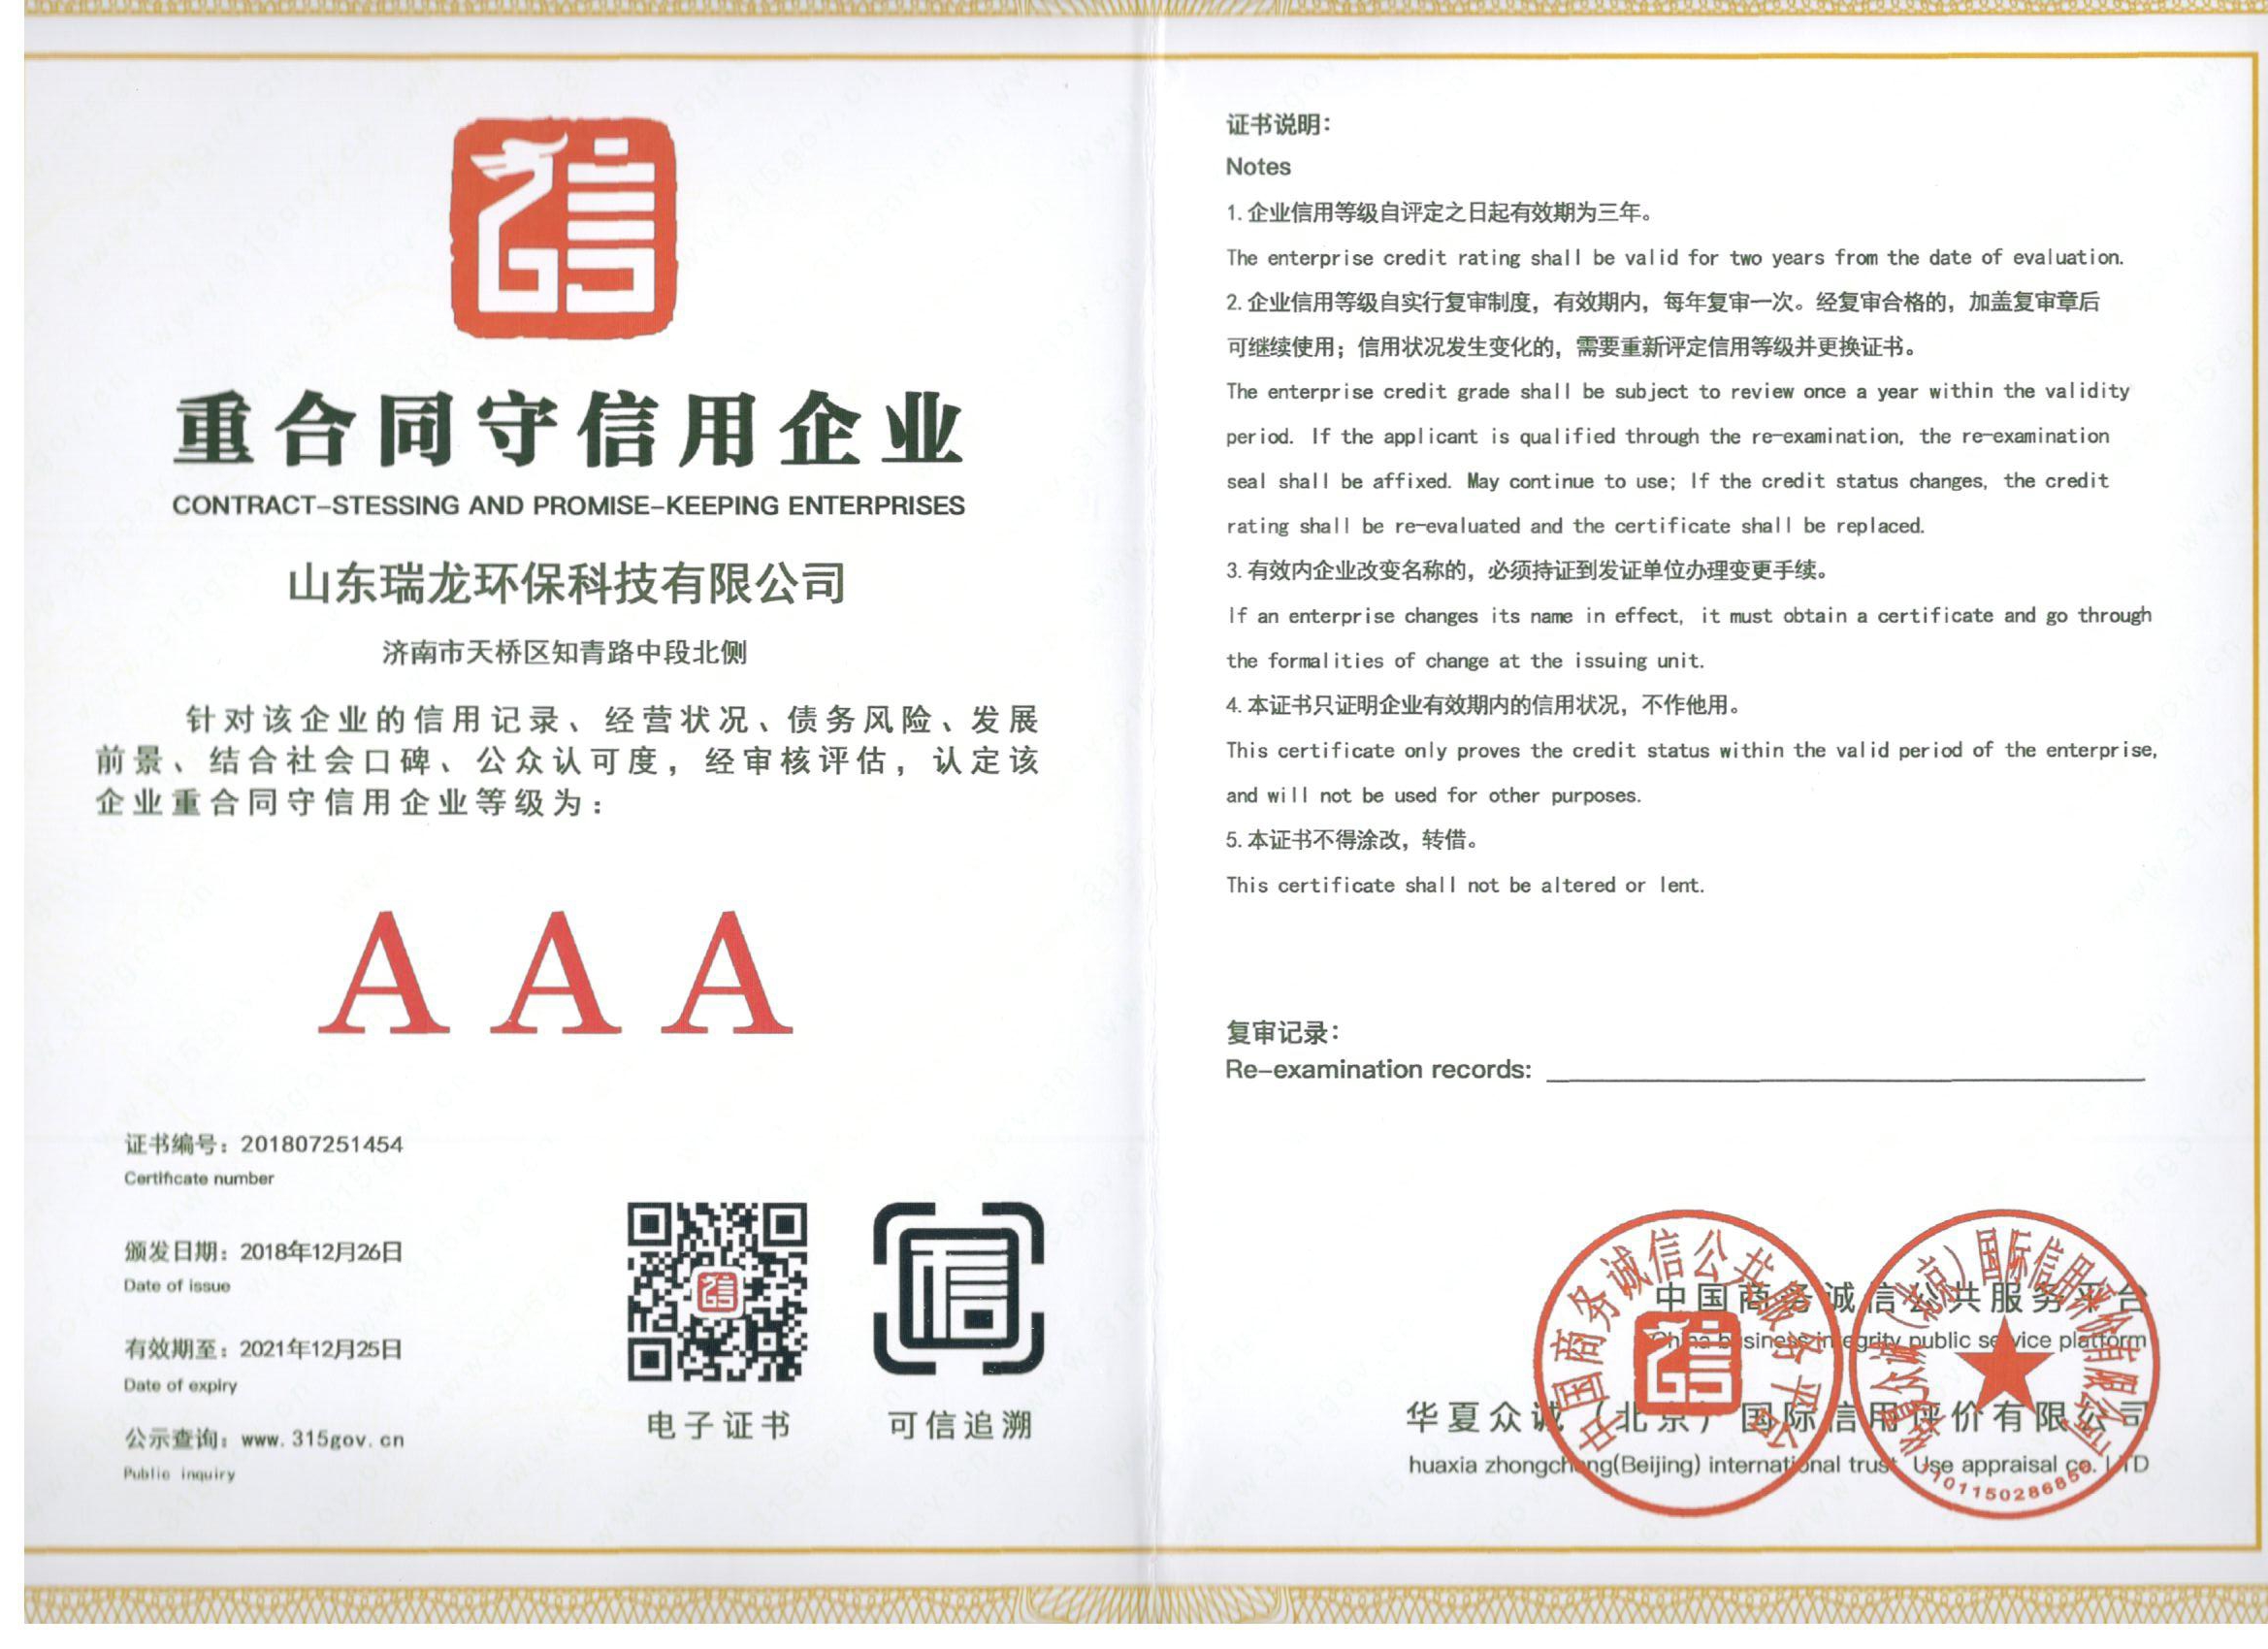 重合同守信用企业证书 Enterprise certificate of abiding by contract and keeping promise